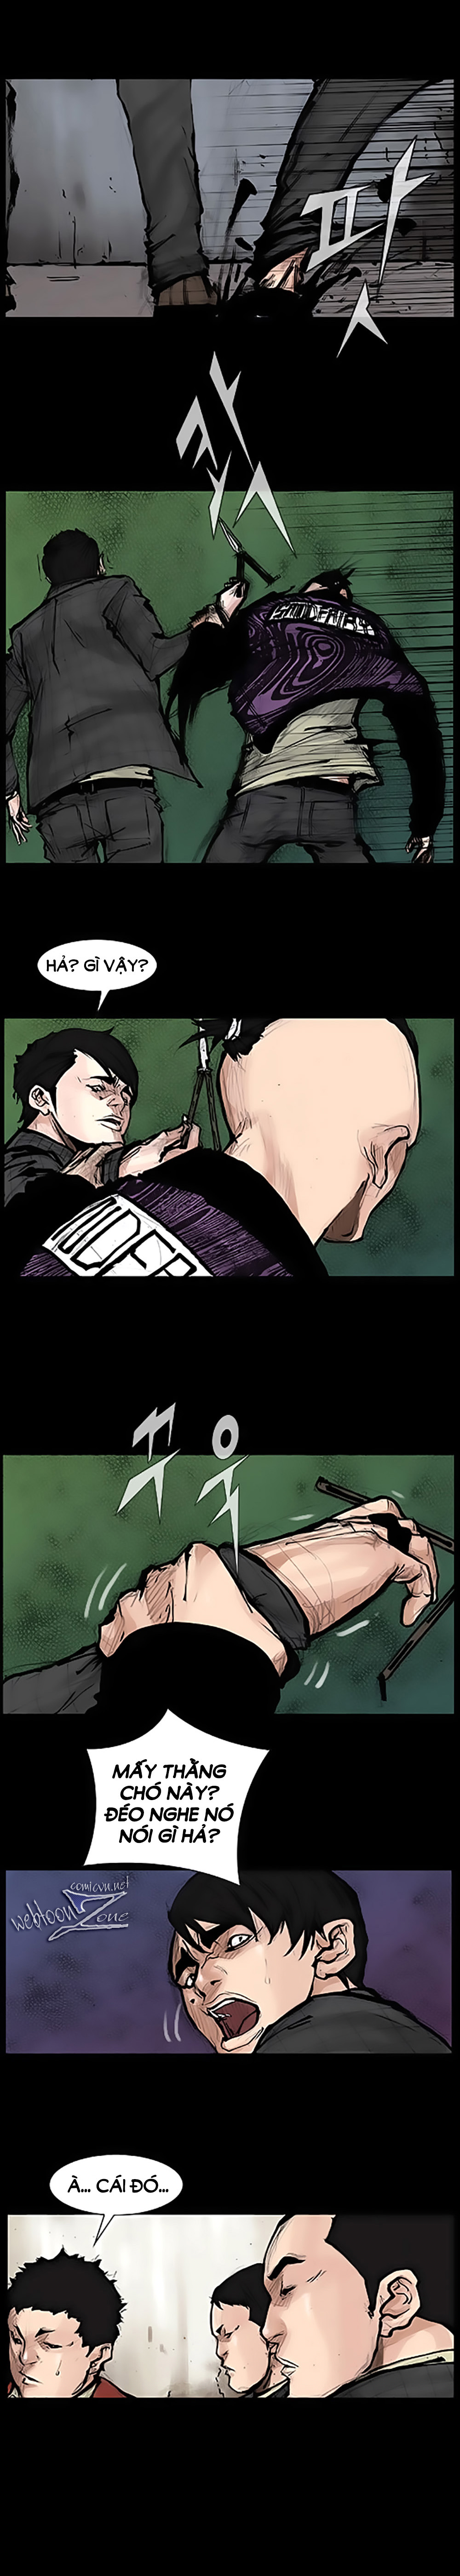 Dokgo Rewind kỳ 7 trang 3